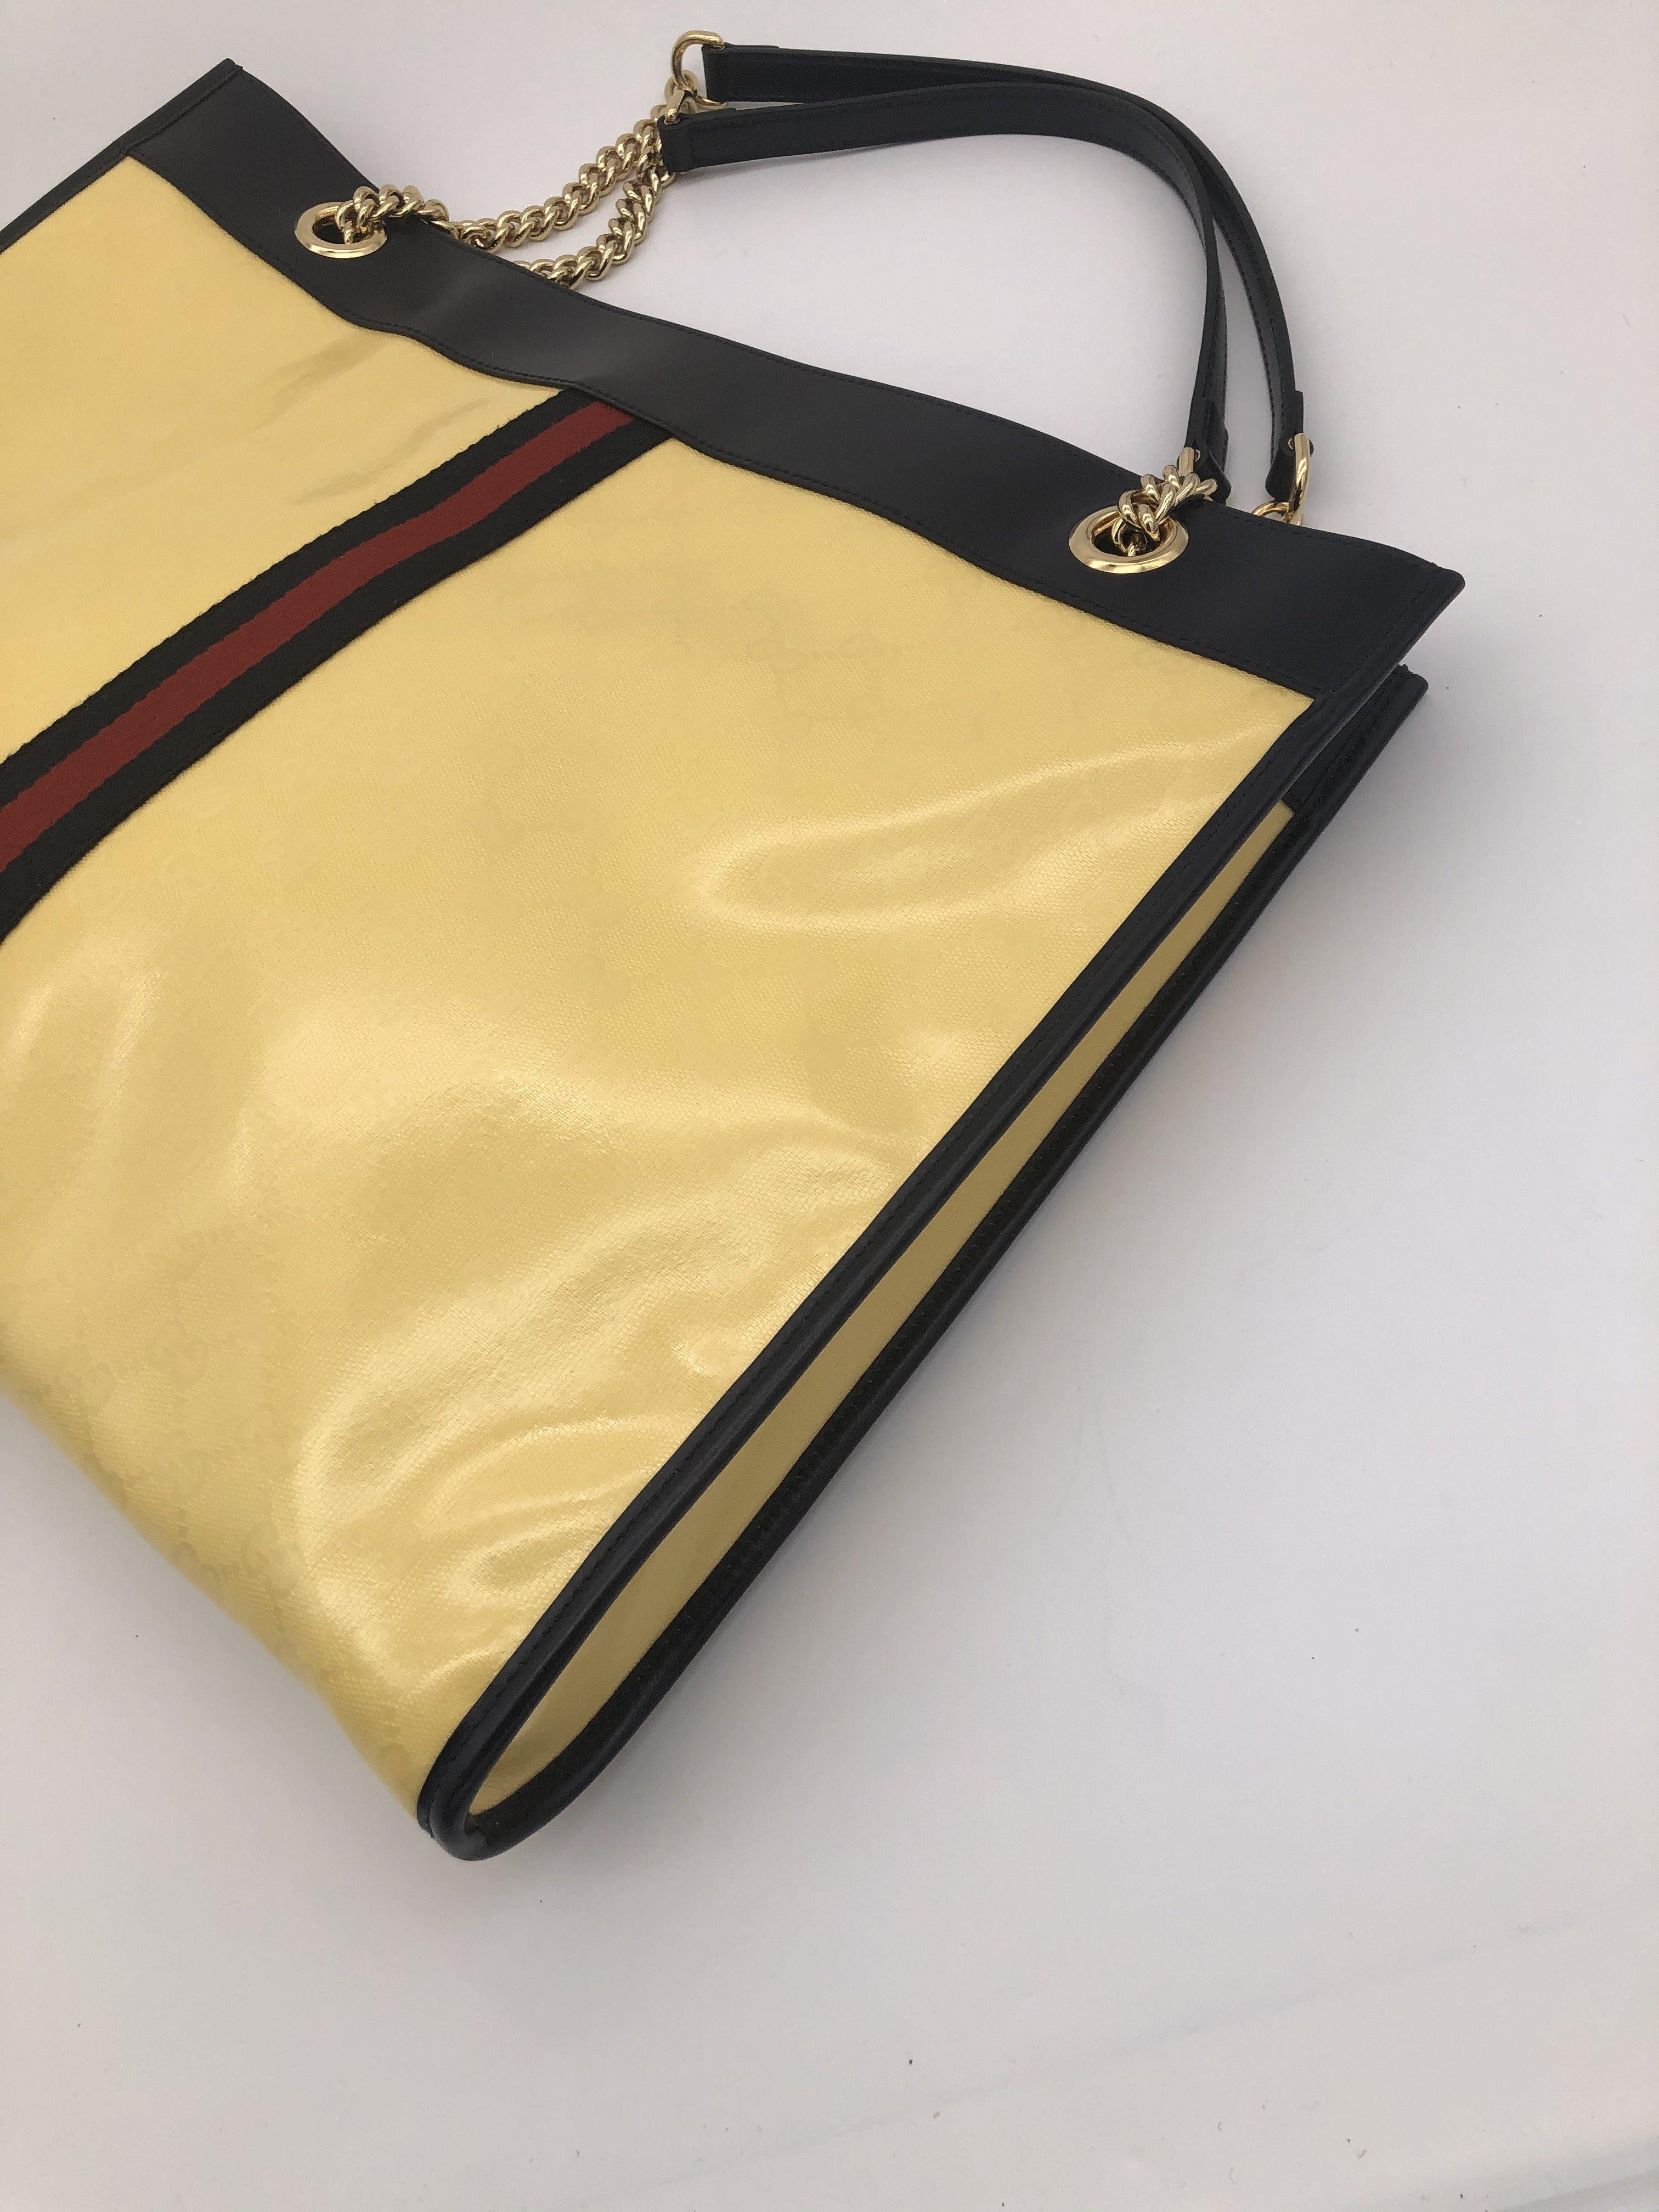 - Designer: GUCCI
- Model: Rajah
- Condition: Never worn. 
- Accessories: Dustbag
- Measurements: Width: 45cm, Height: 35cm, Depth: 4cm
- Exterior Material: Canvas
- Exterior Color: Yellow
- Interior Material: Suede
- Interior Color: Beige
-